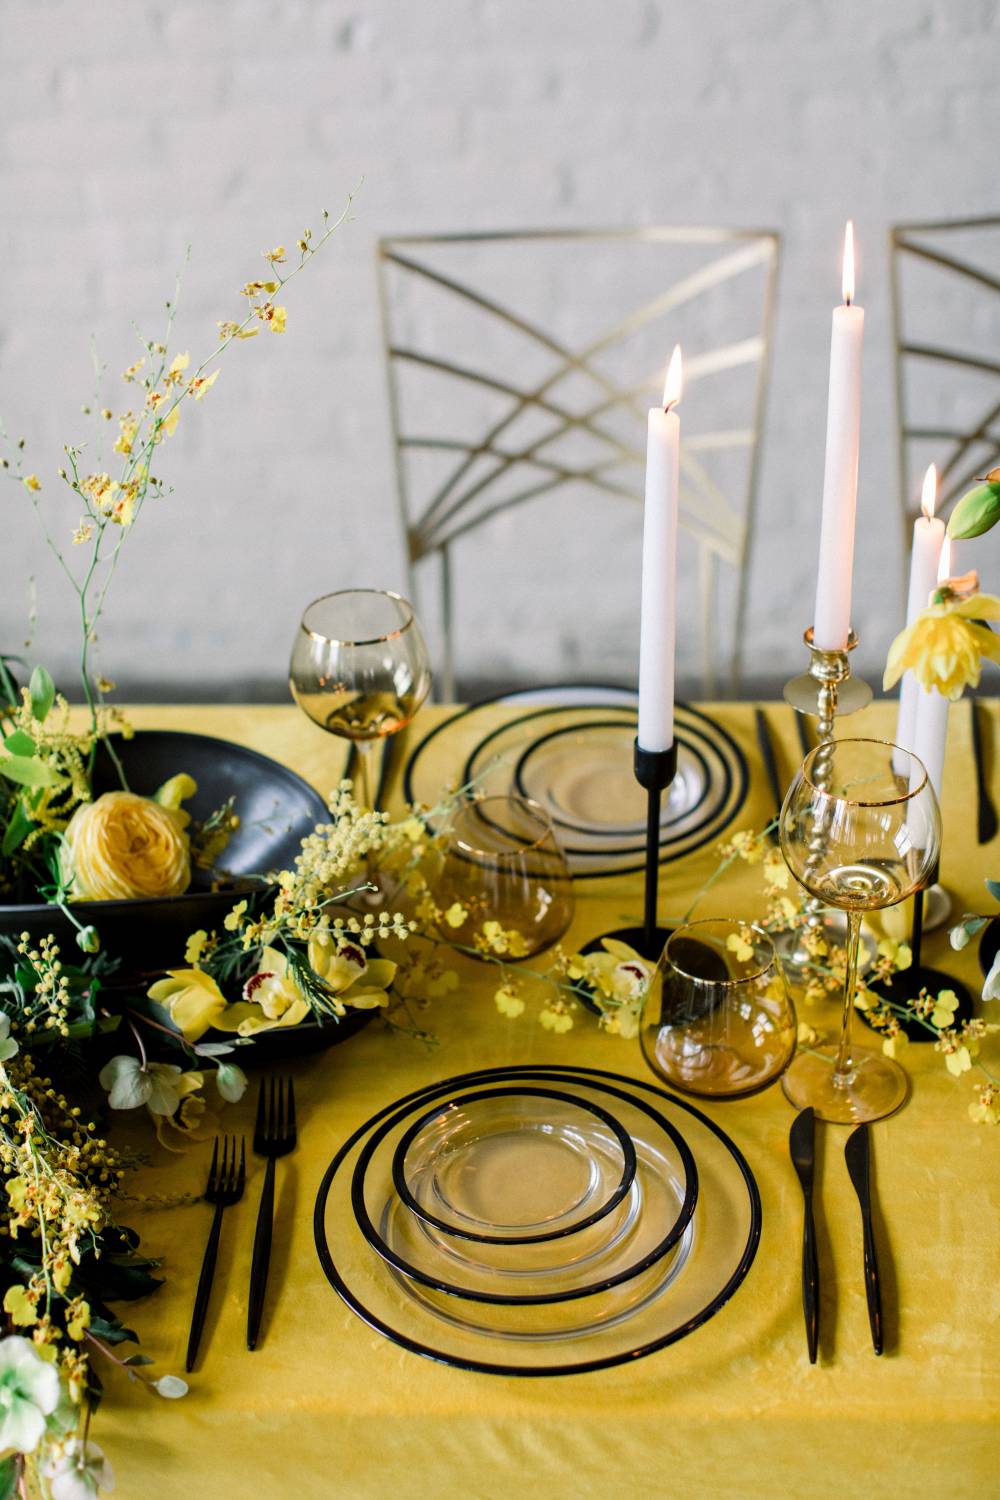 Black and Yellow Wedding Table Decor and Setting